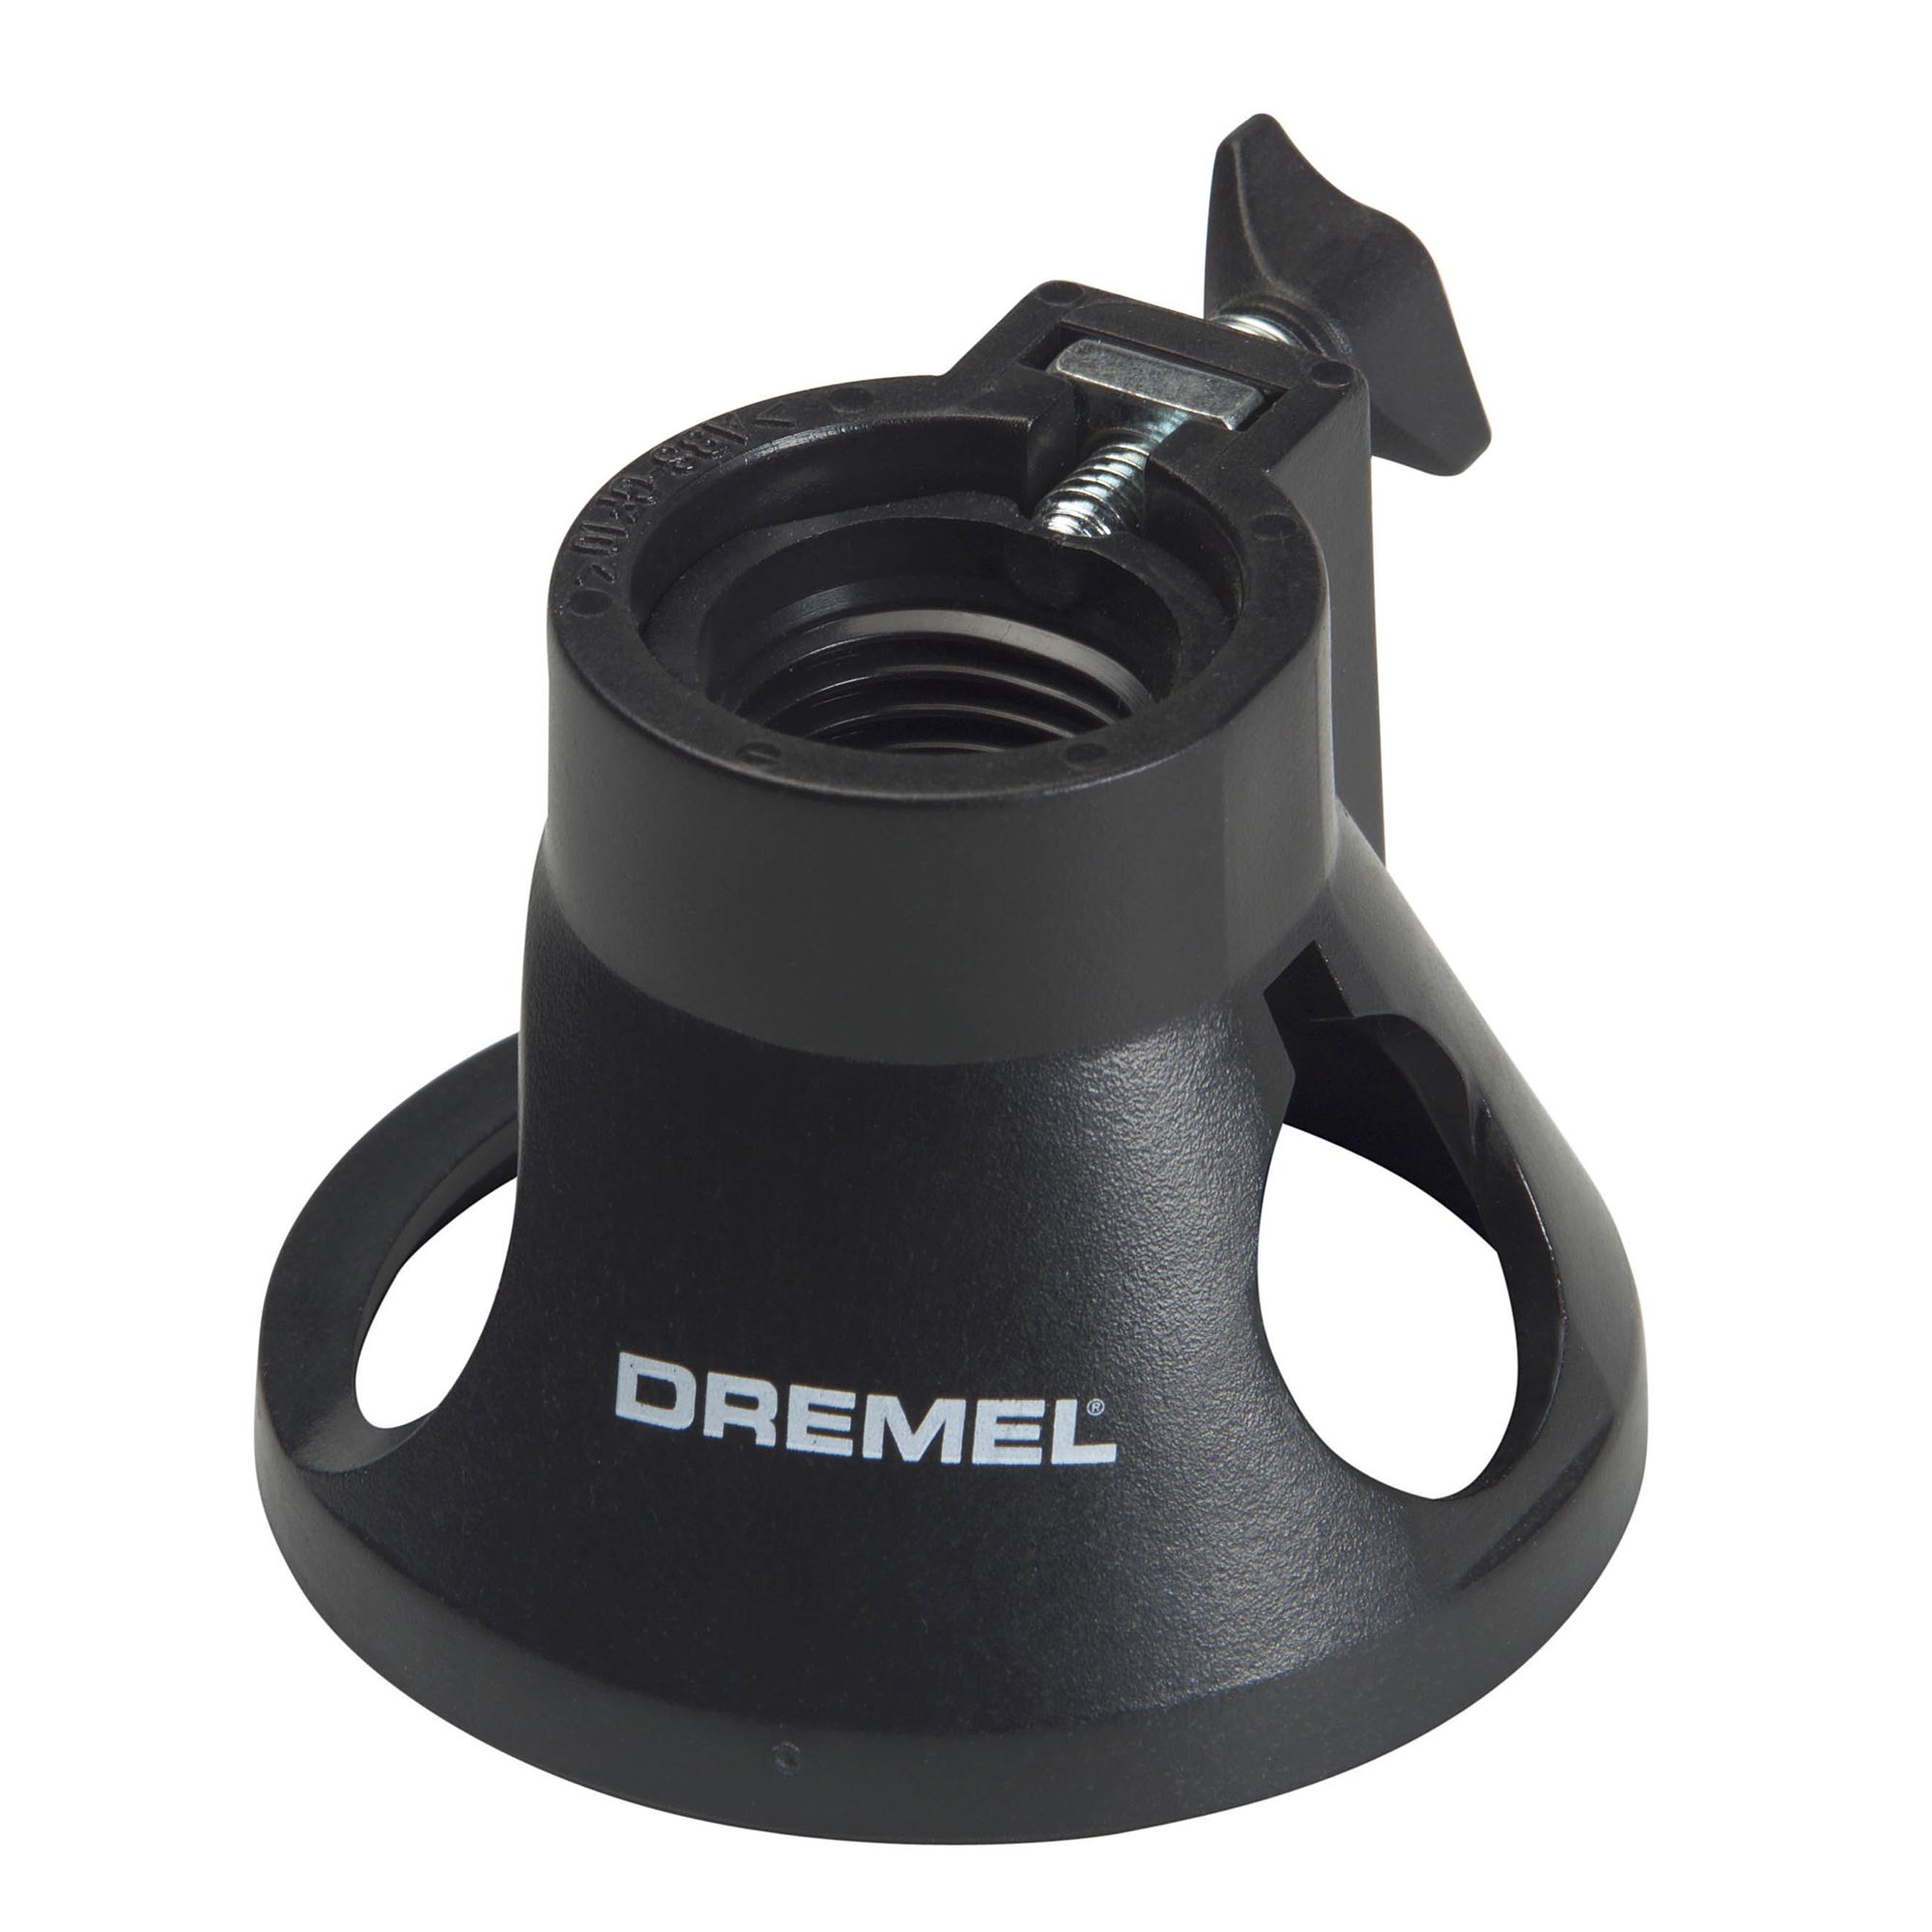 Dremel attachments 4 piece Multi-tool kit